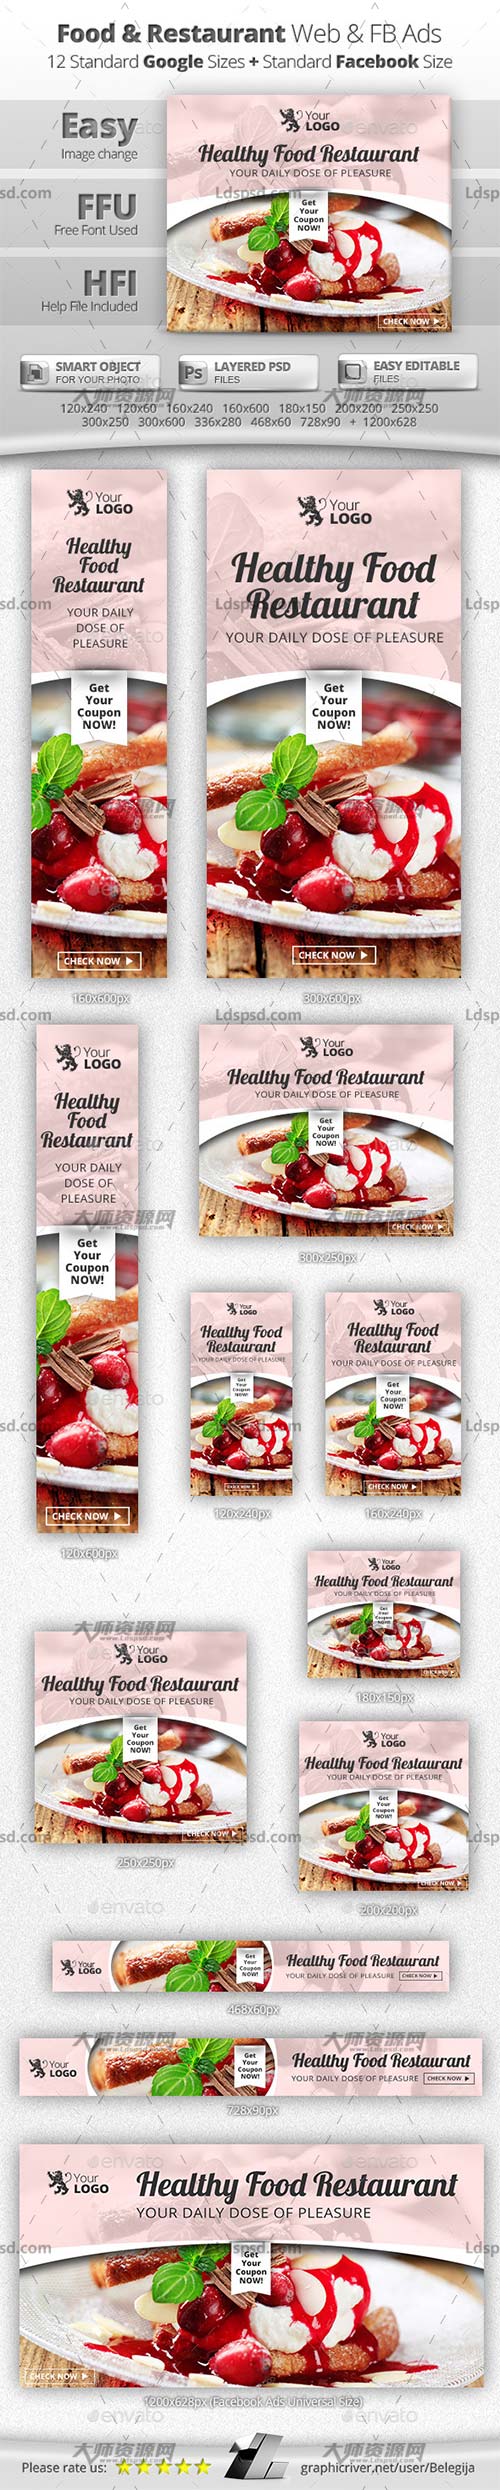 Food & Restaurant Web & Facebook Banners,网店对联/横幅广告模板(食品促销类)